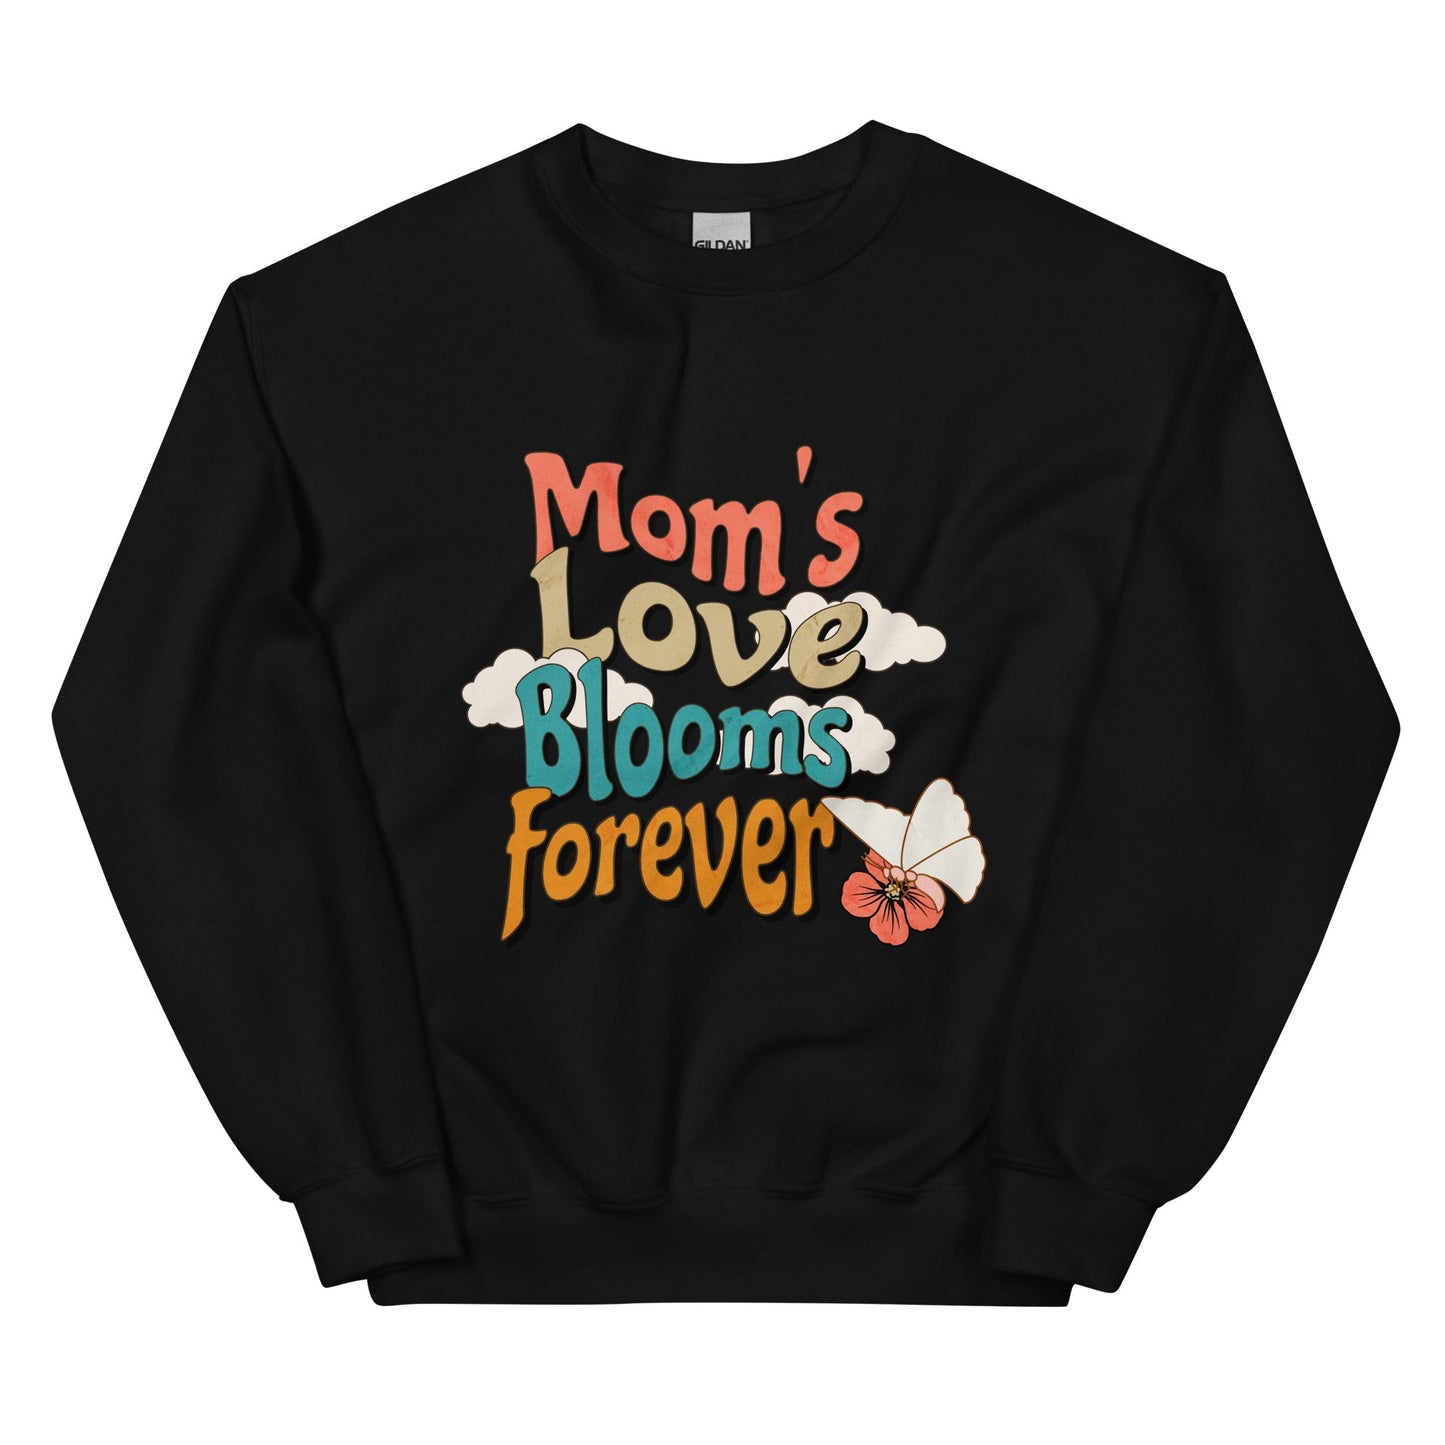 Mom's Love Blooms Forever Sweatshirt-Black-S-mysticalcherry